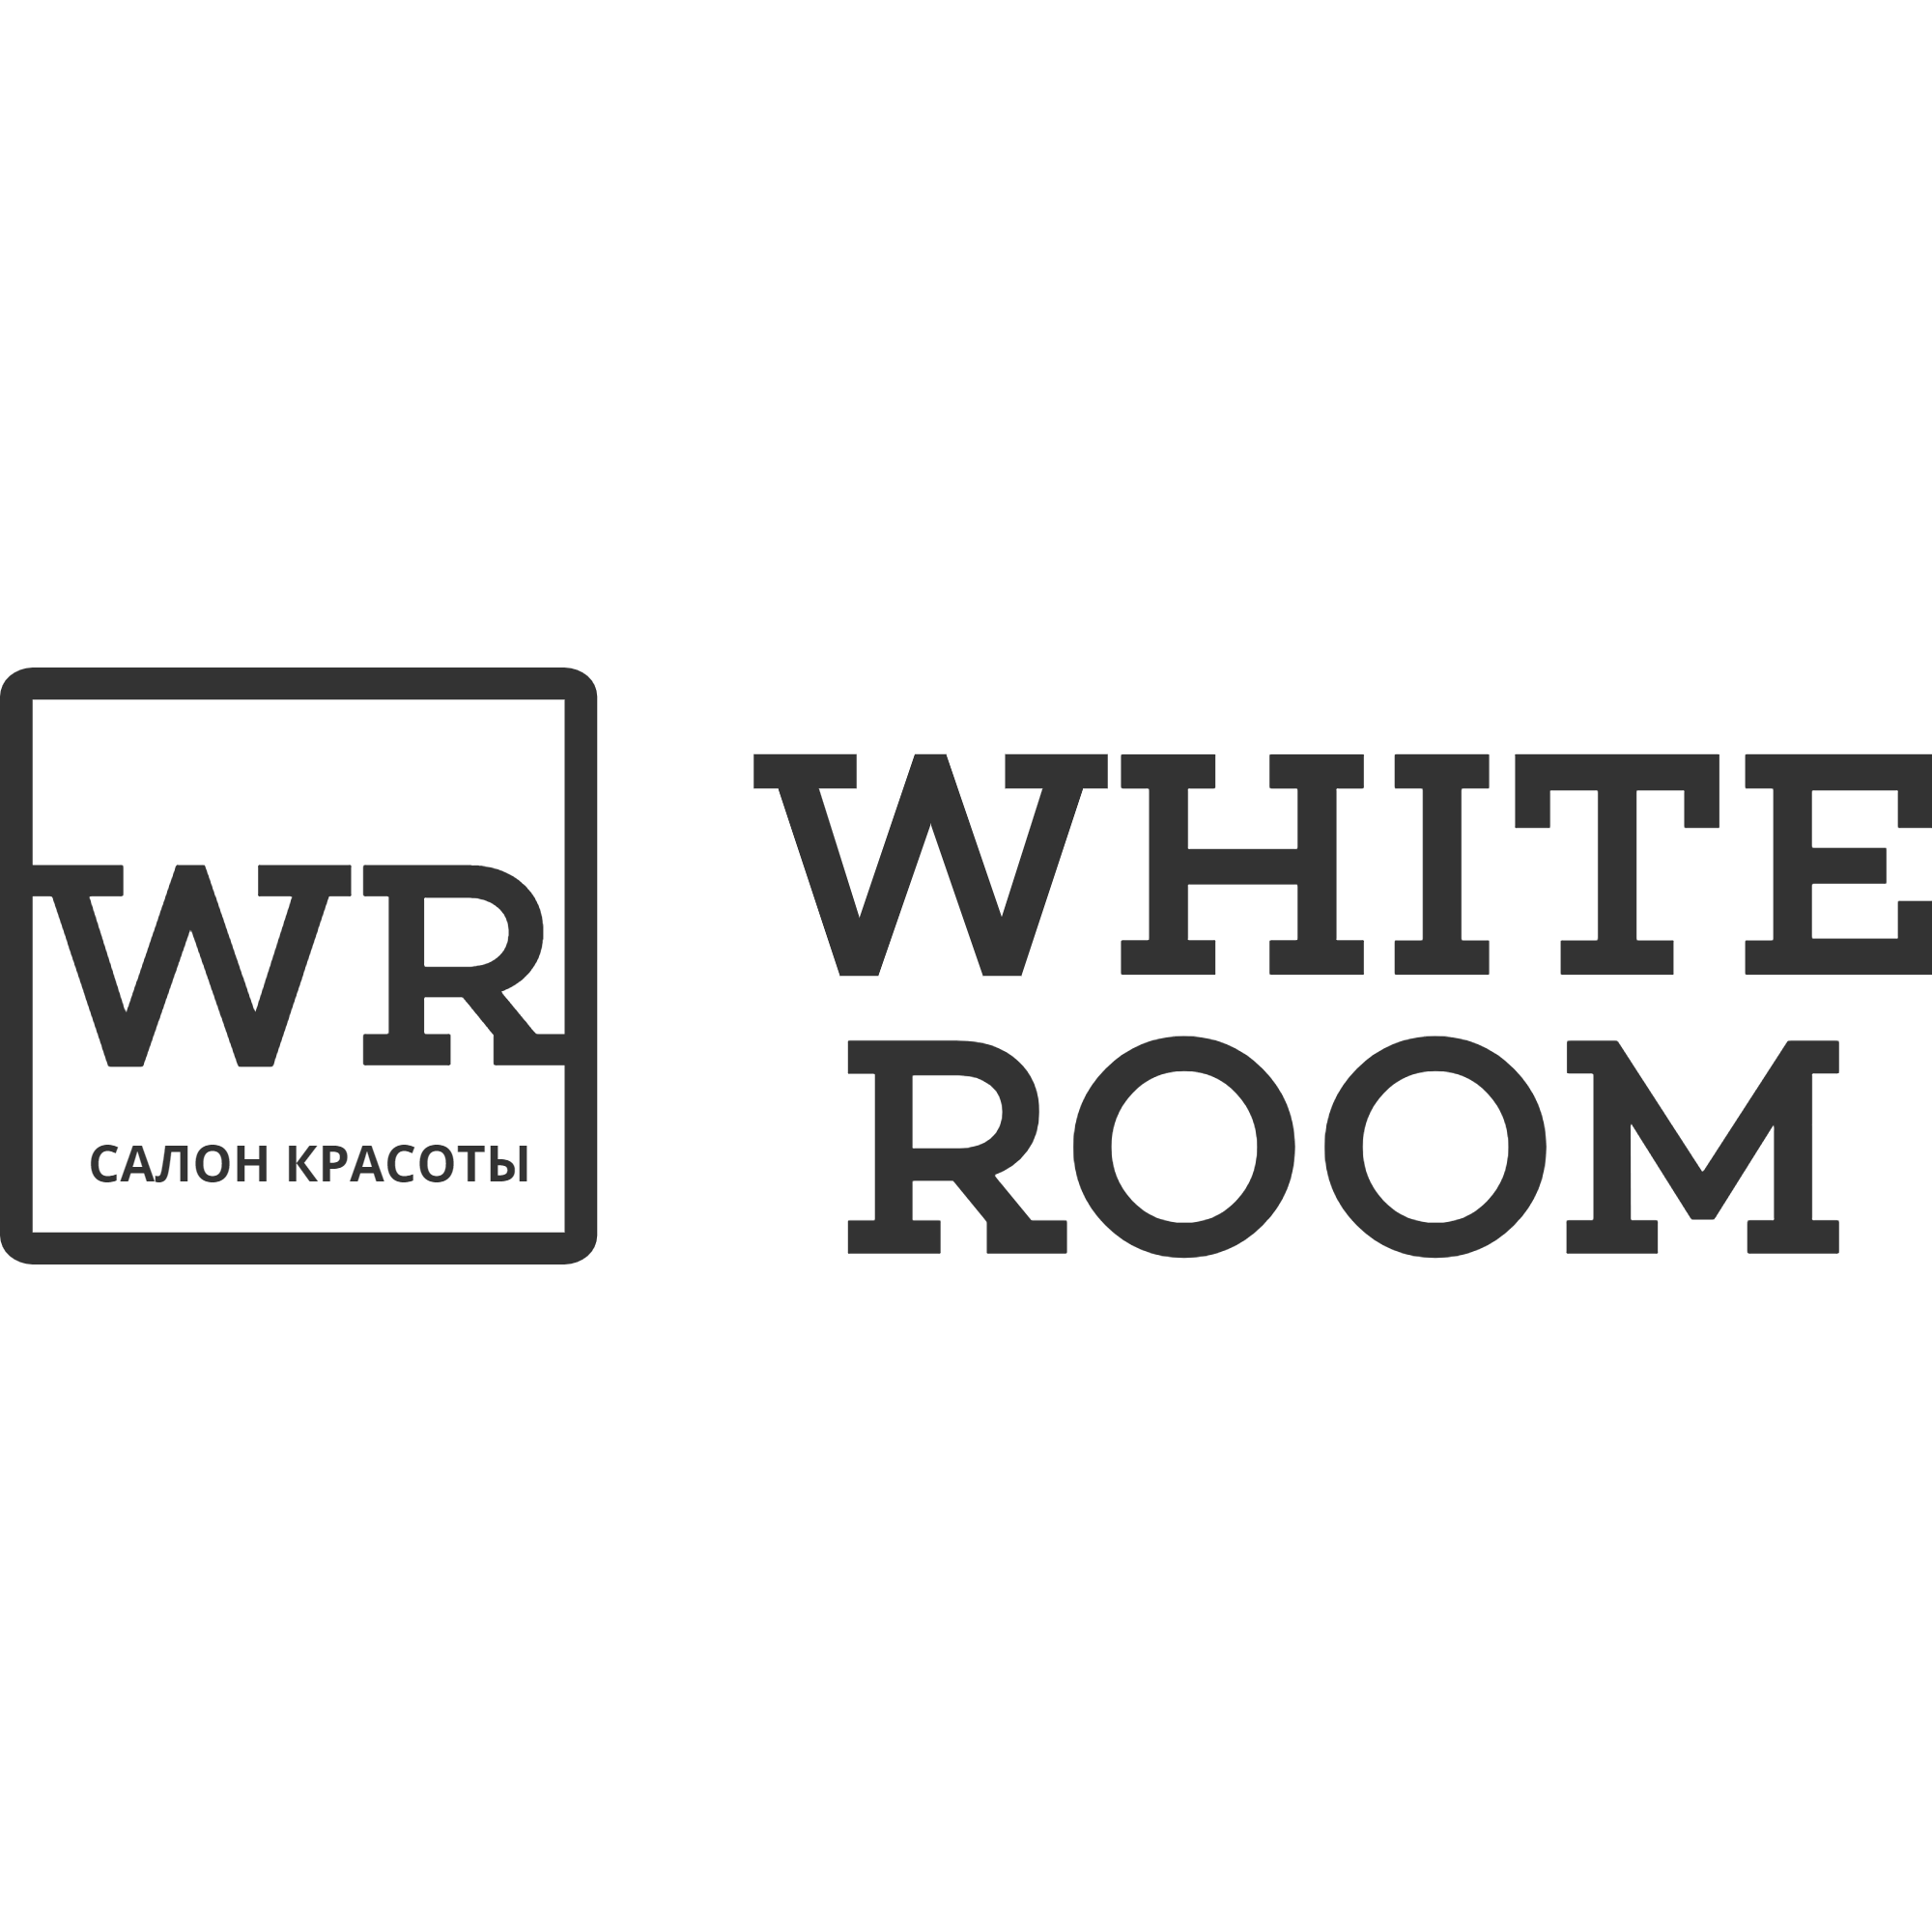 White Room Новосибирск. White Room logo. Аянакоджи Вайт рум. Вайт рум сантехника вывеска. Rooms новосибирск